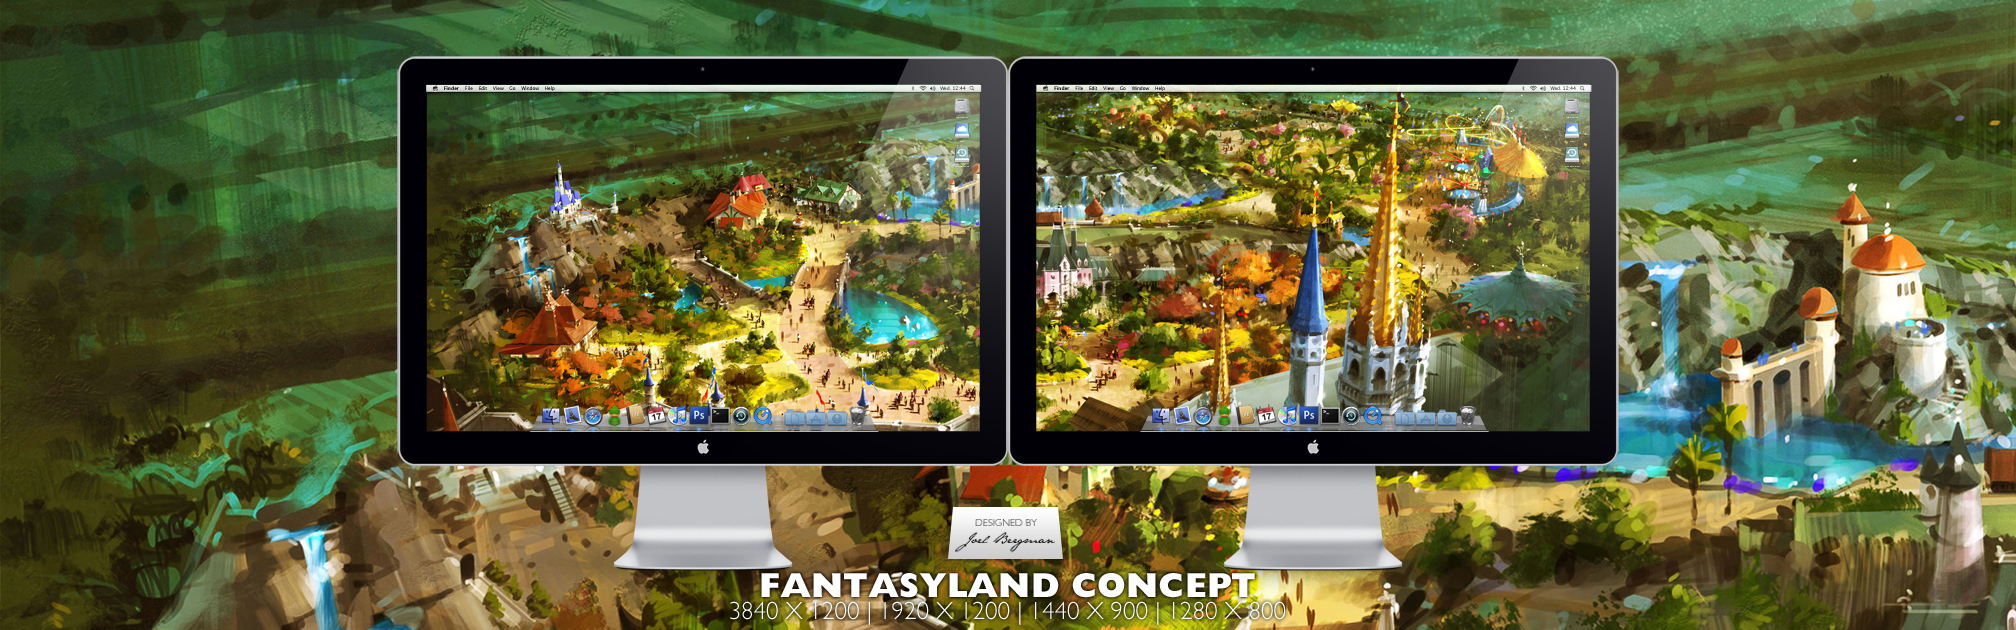 Fantasyland Concept